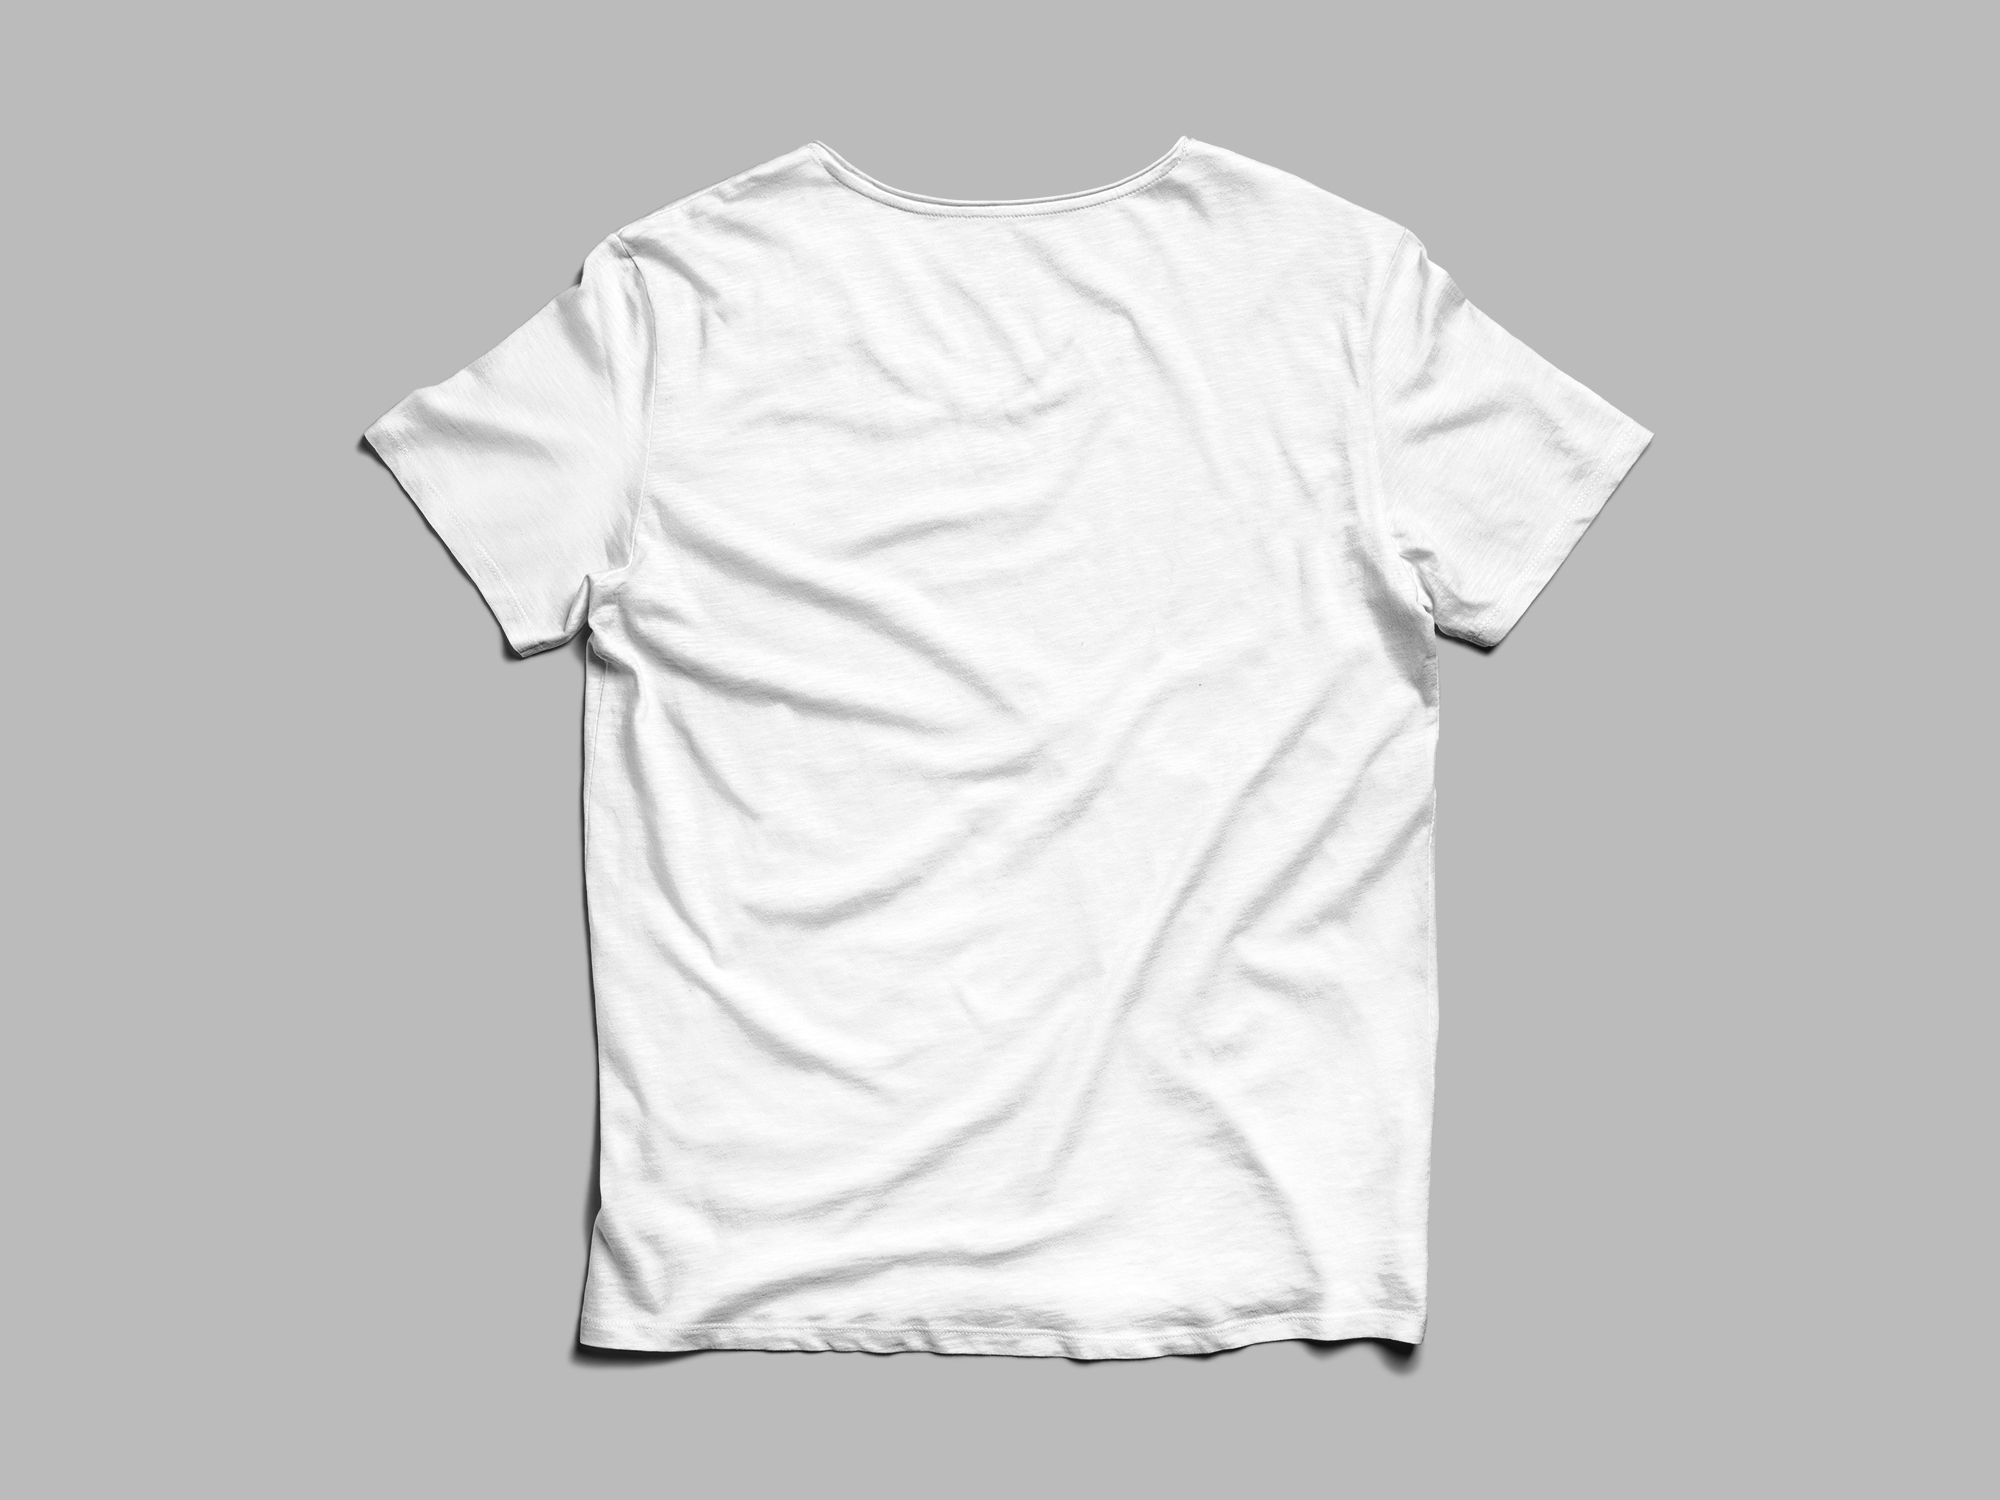 White T Shirt Mockup Free Download Radea